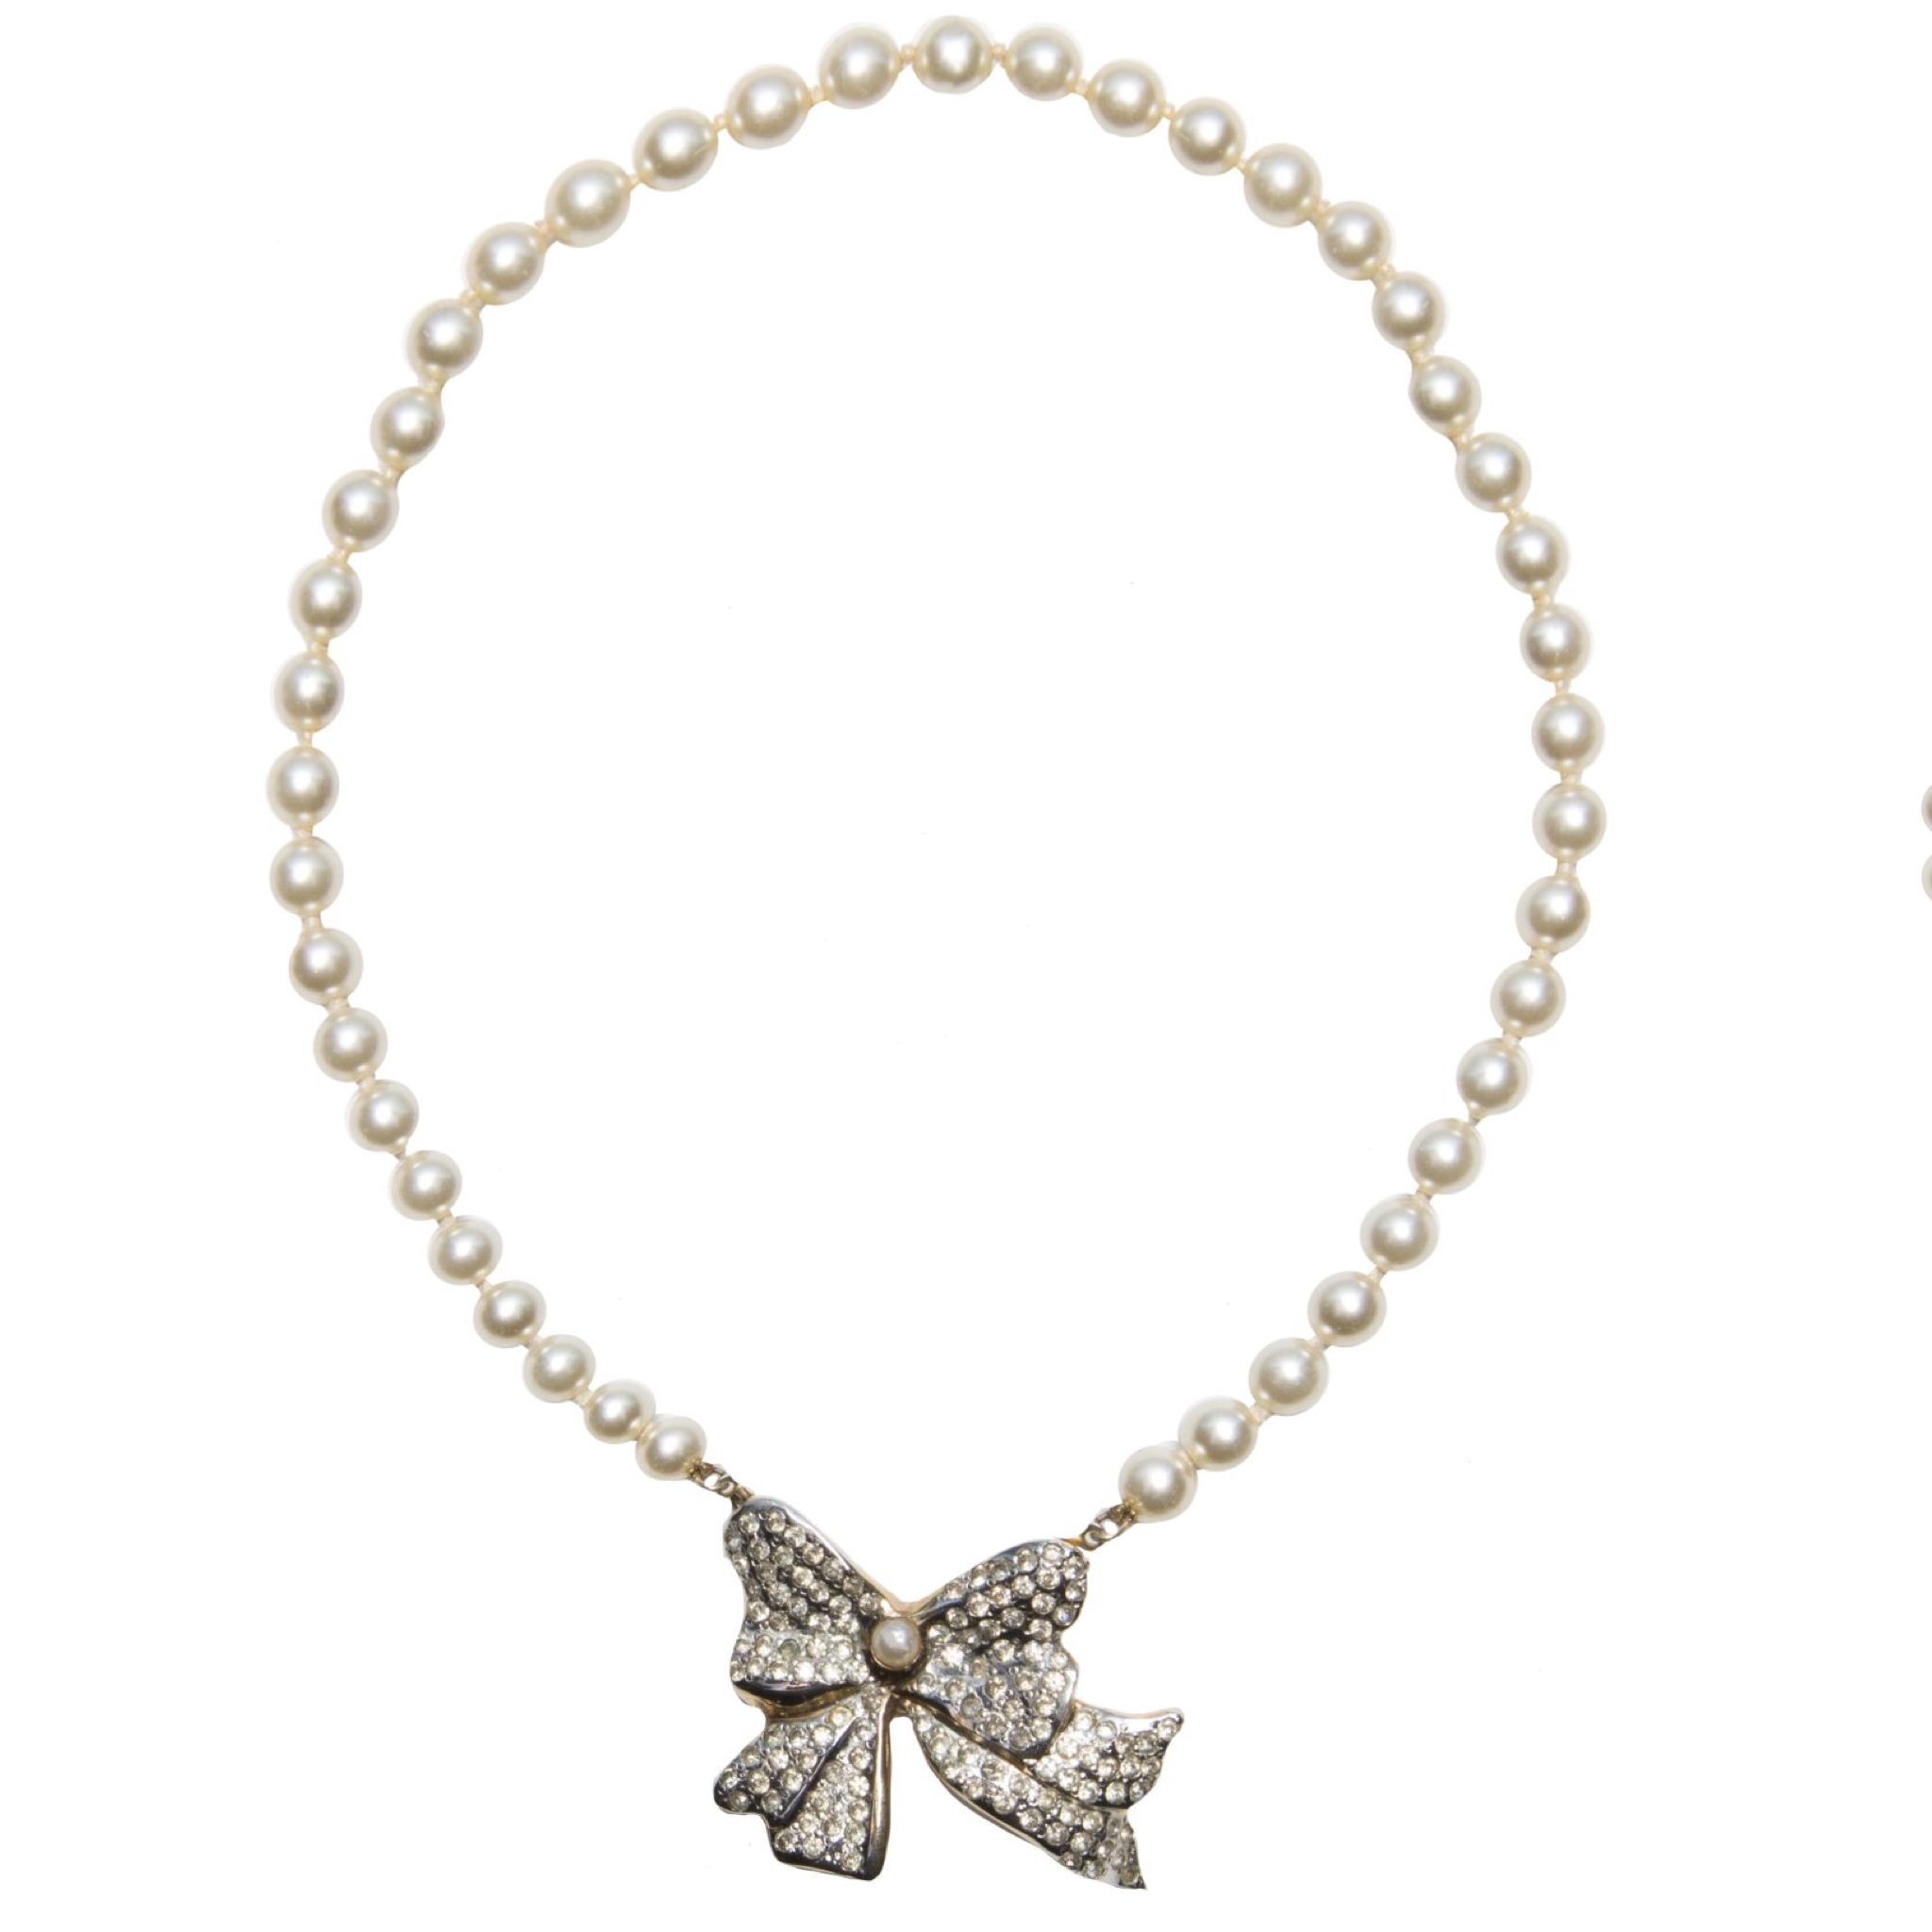 Vintage rhinestone bow pearl necklace